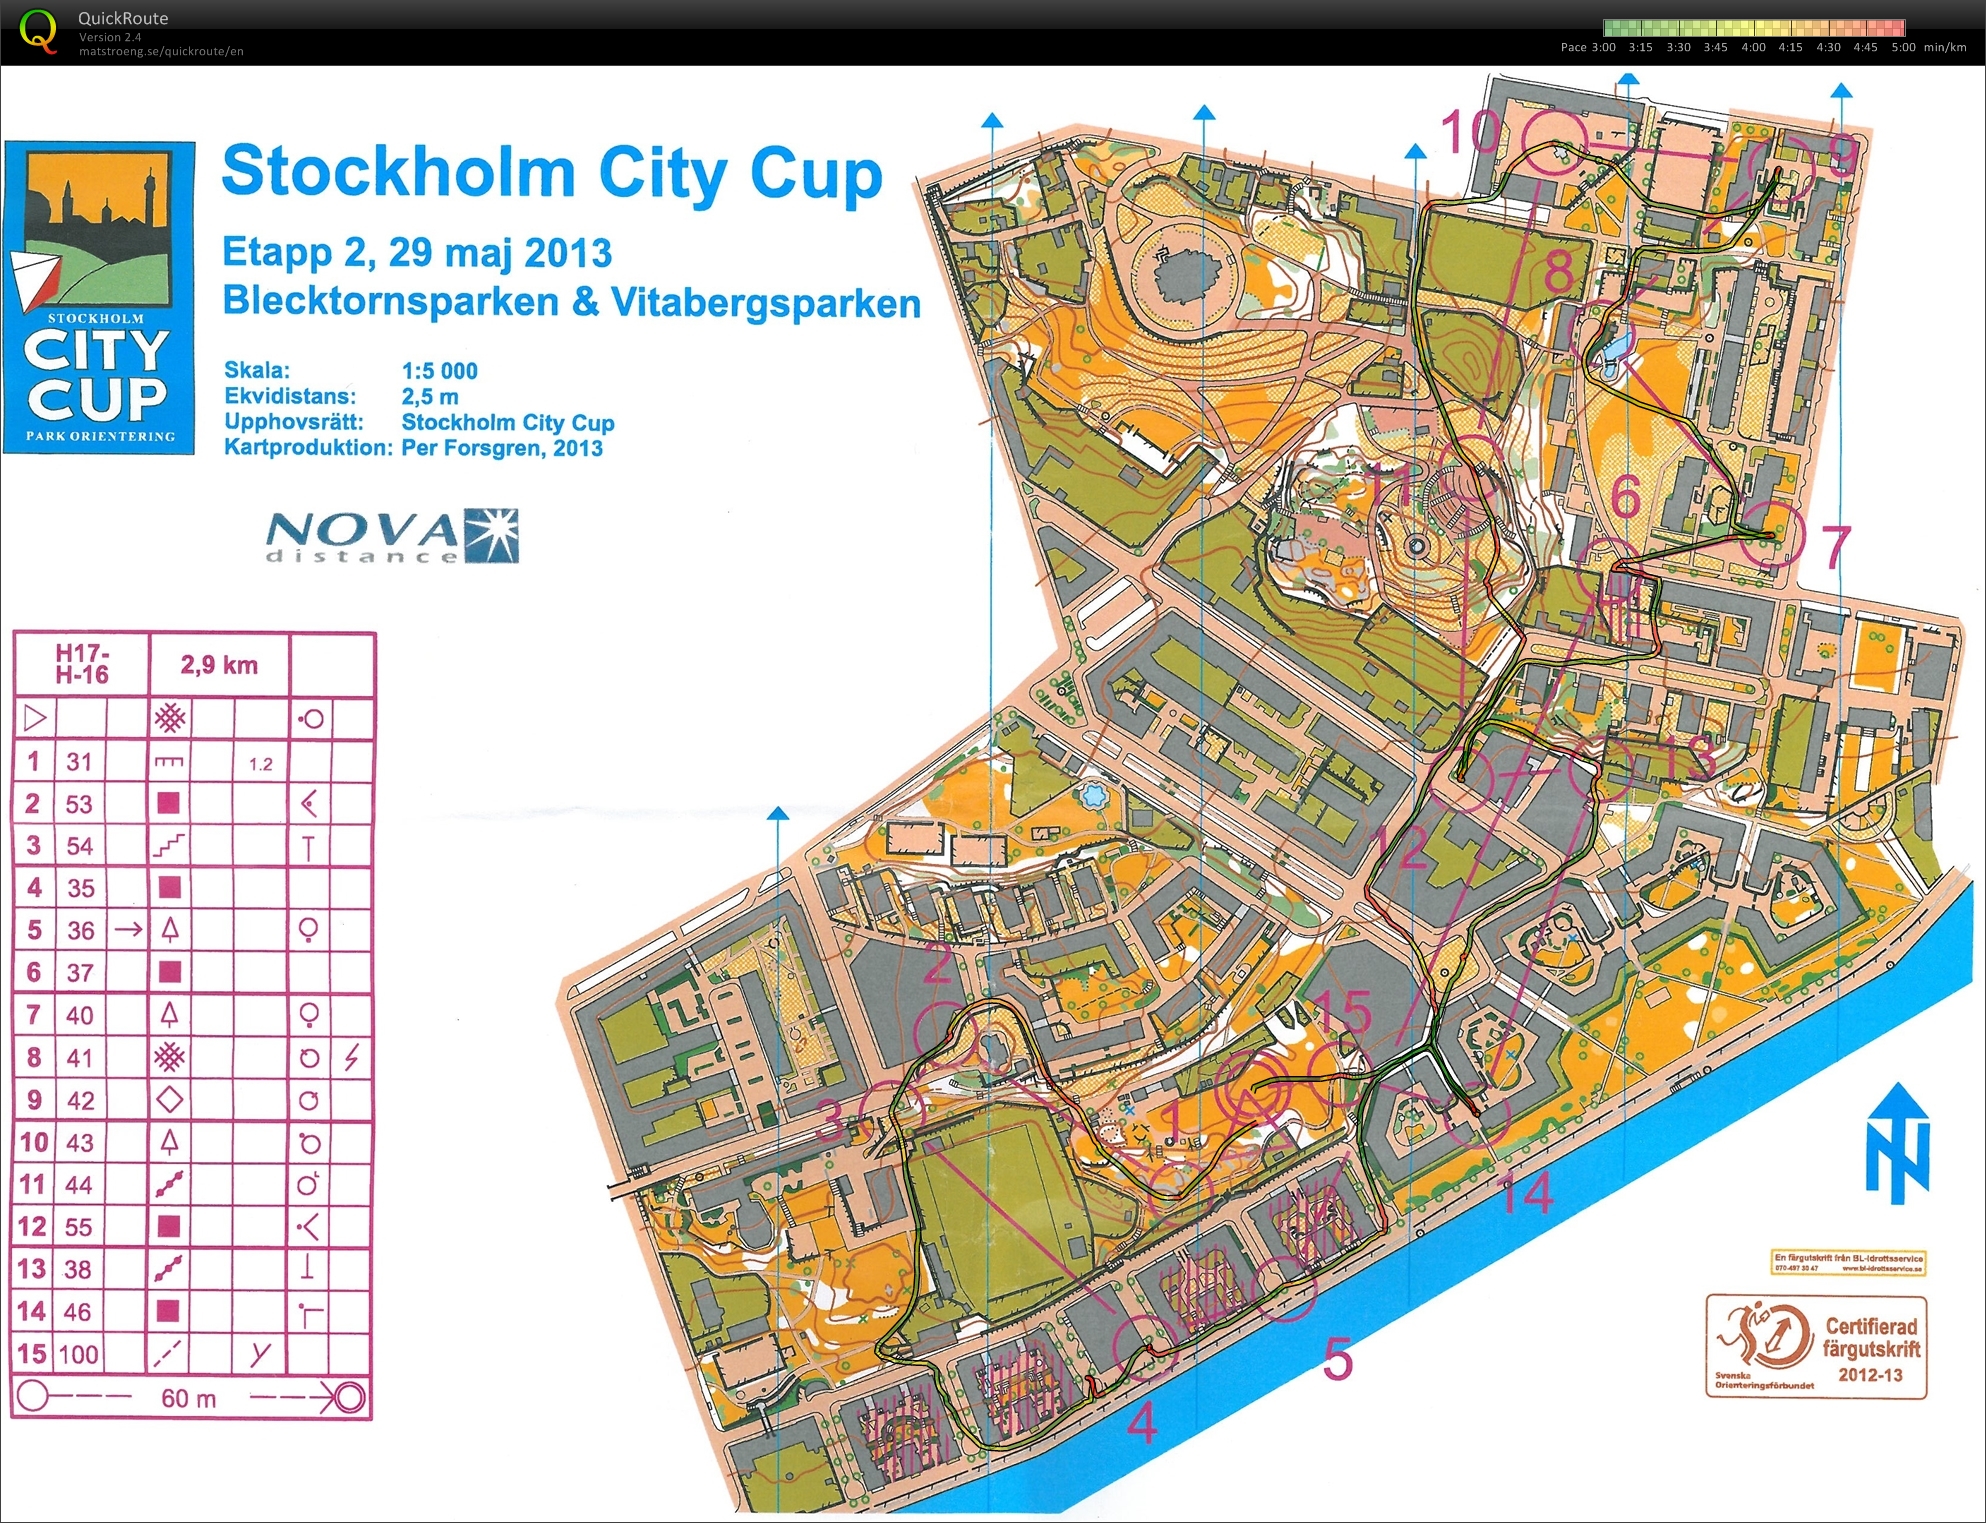 Stockholm City Cup, etapp 2 (29-05-2013)